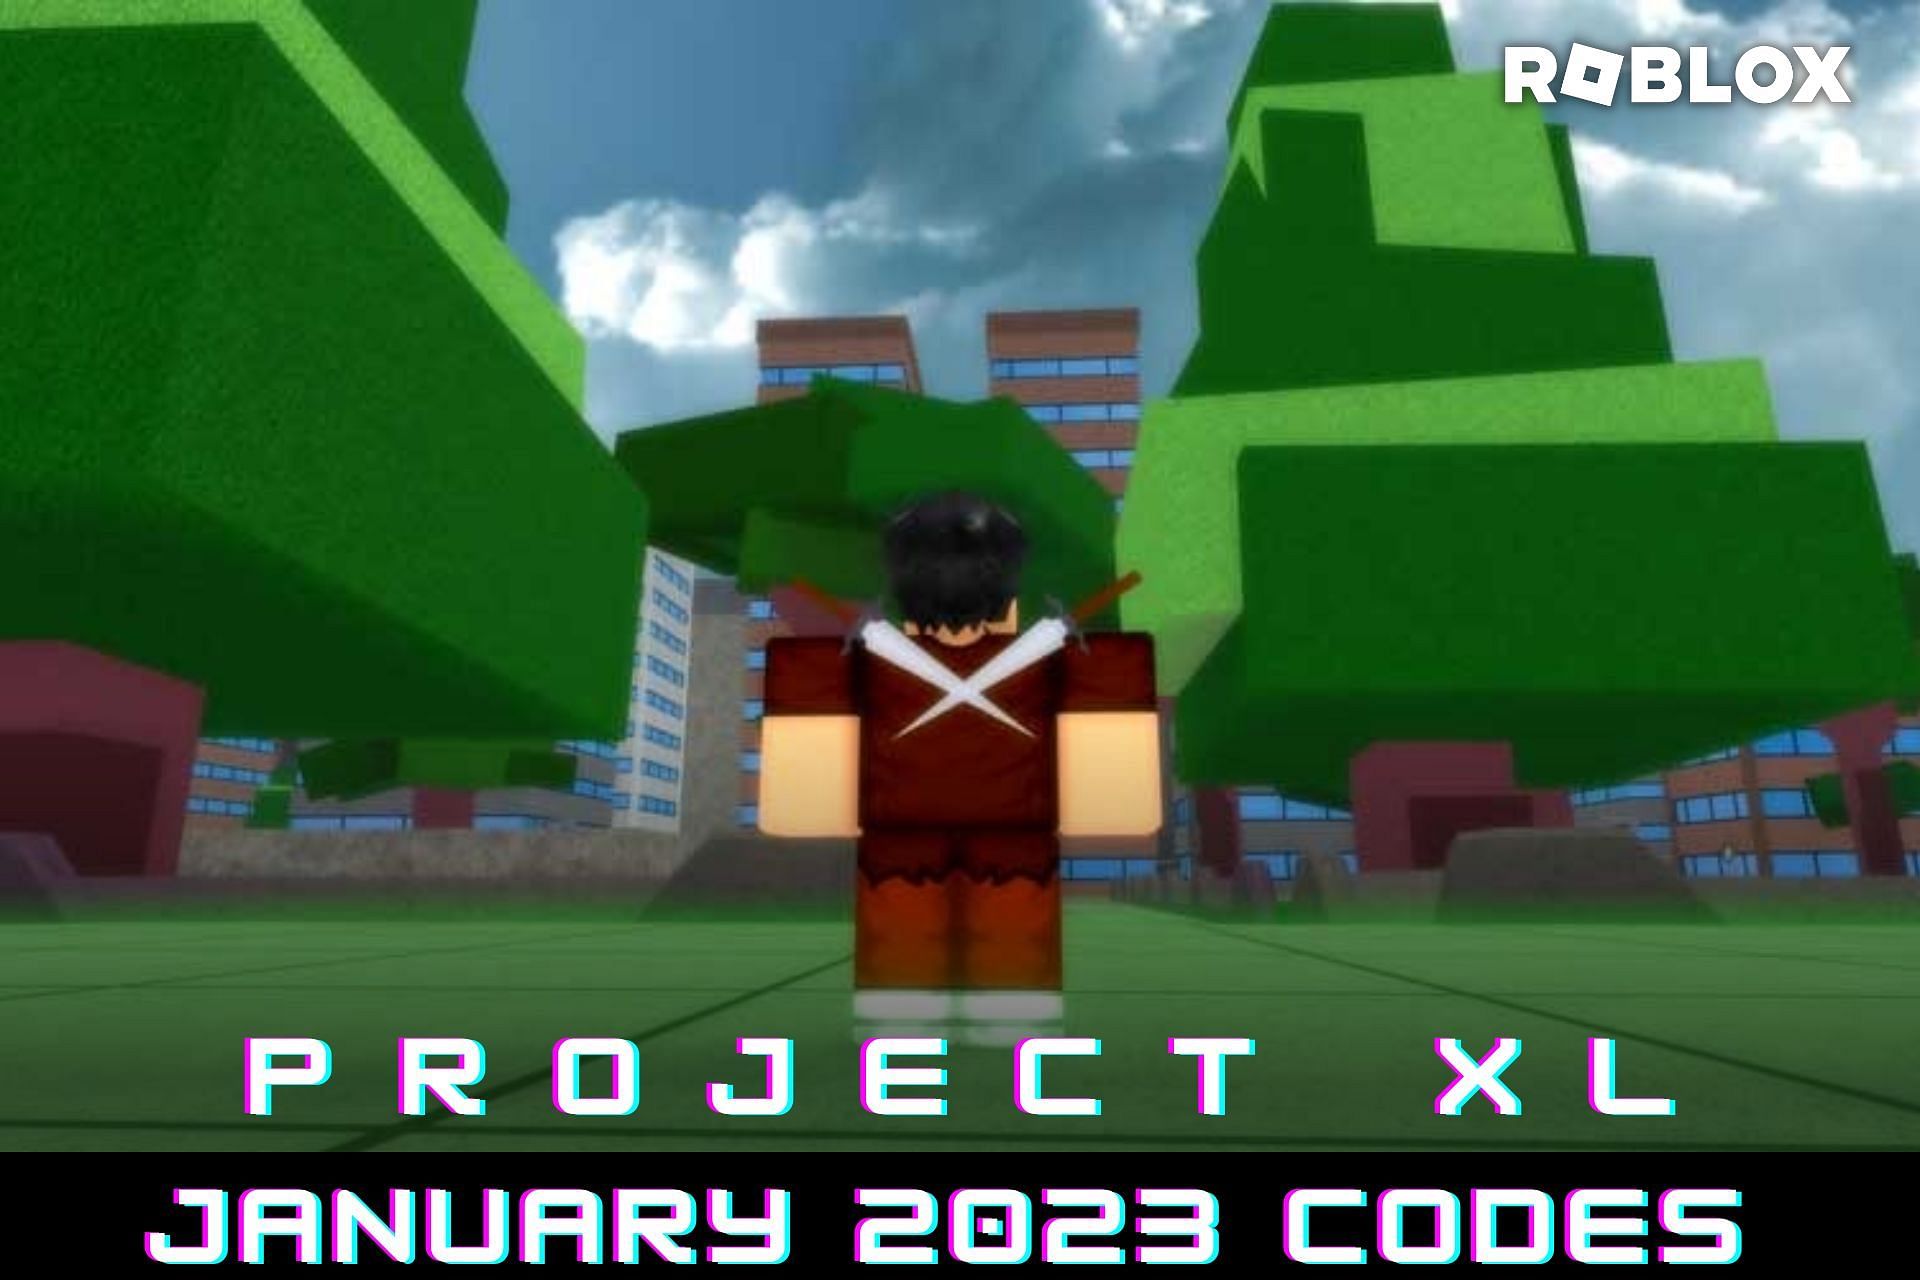 Project xl roblox. РОБЛОКС 2023. Project XL codes. Йоши РОБЛОКС 2023. Информация о РОБЛОКСЕ 2023.